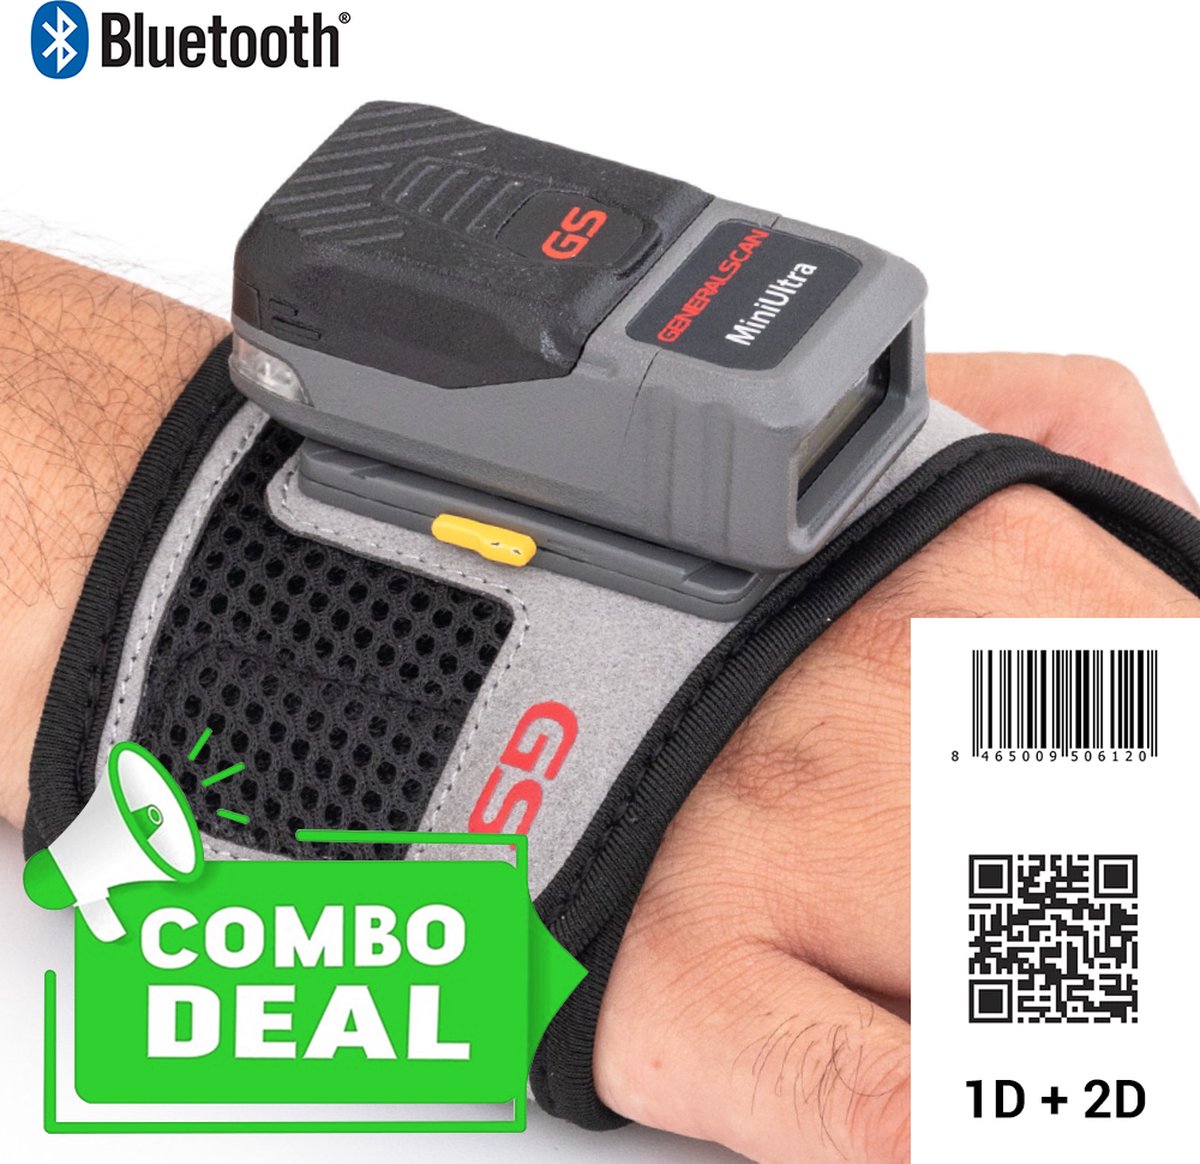 Generalscan GS R5524 with Scan Glove - Bluetooth 2D Barcode scanner - Combi Deal - 2D-barcodes - Handscanner